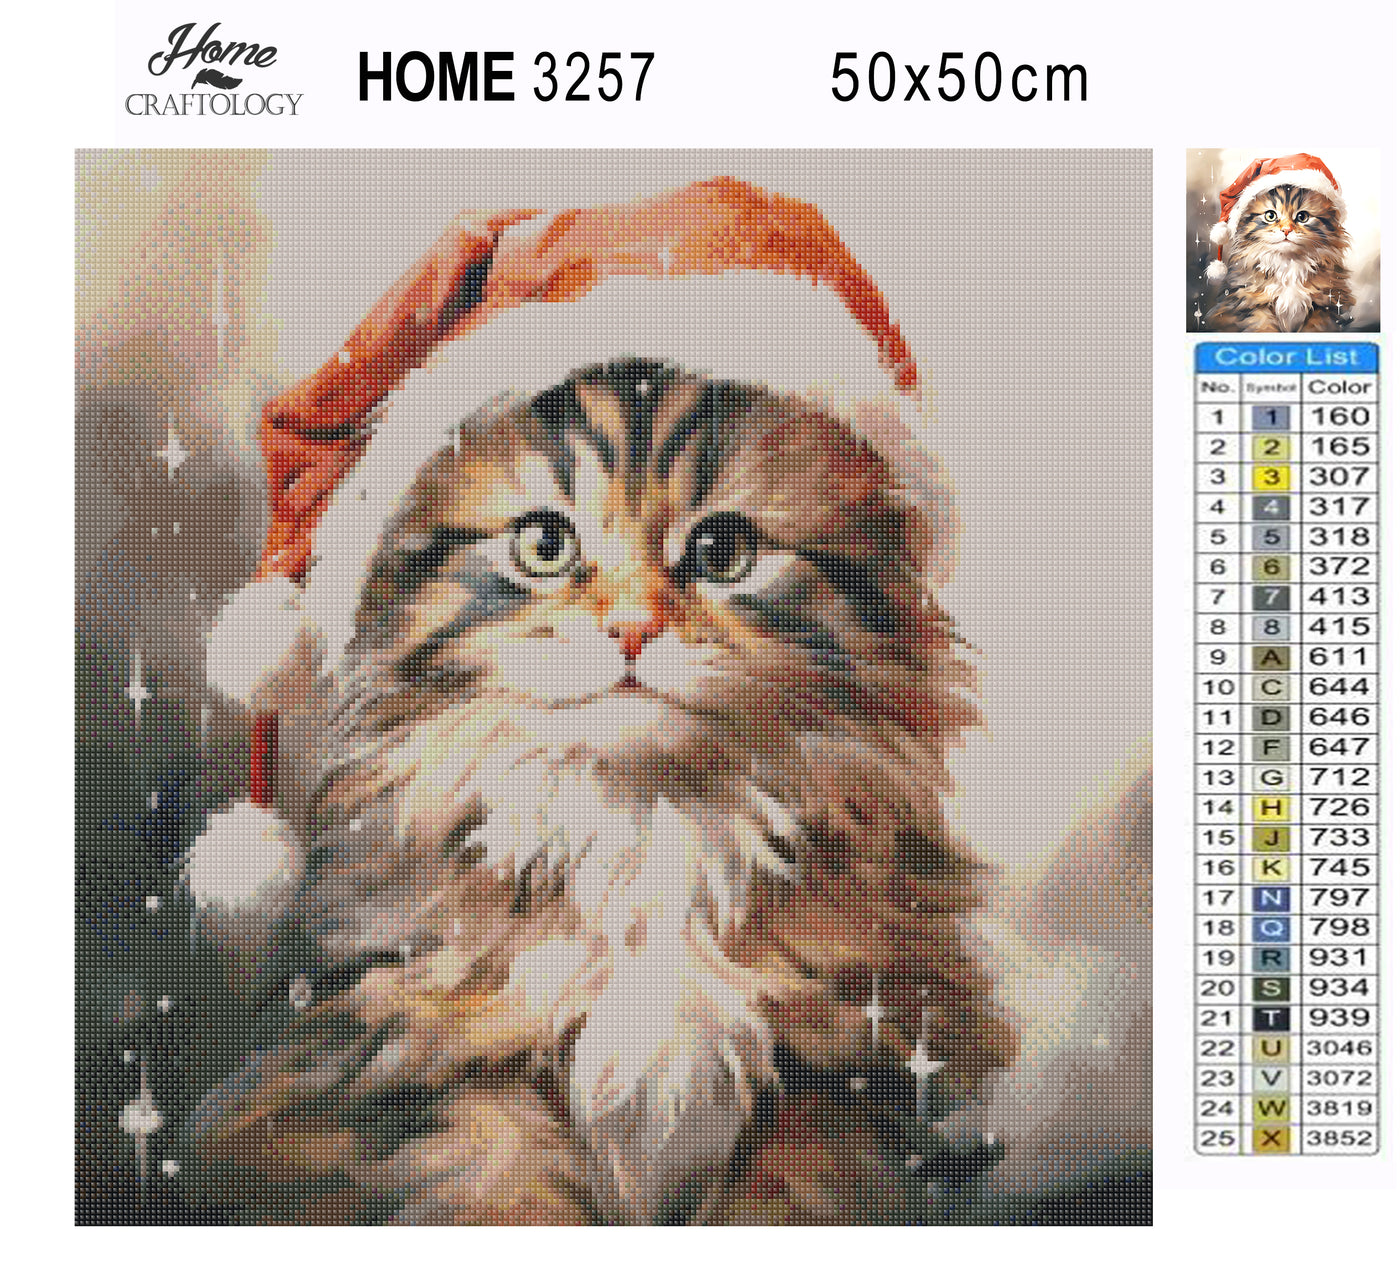 Cat in a Santa Hat - Premium Diamond Painting Kit